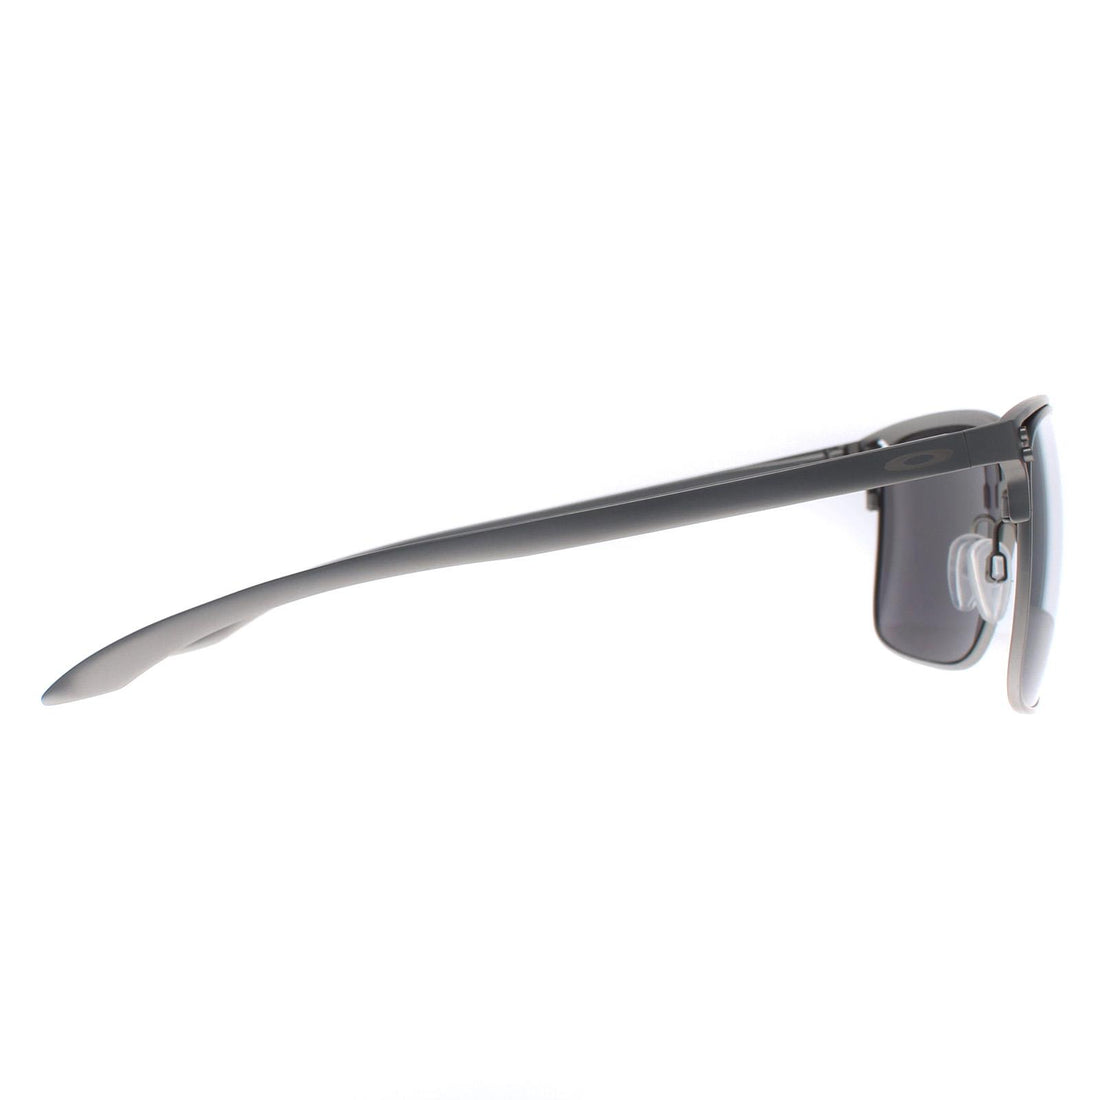 Oakley Sunglasses Holbrook TI OO6048-01 Satin Chrome Prizm Black